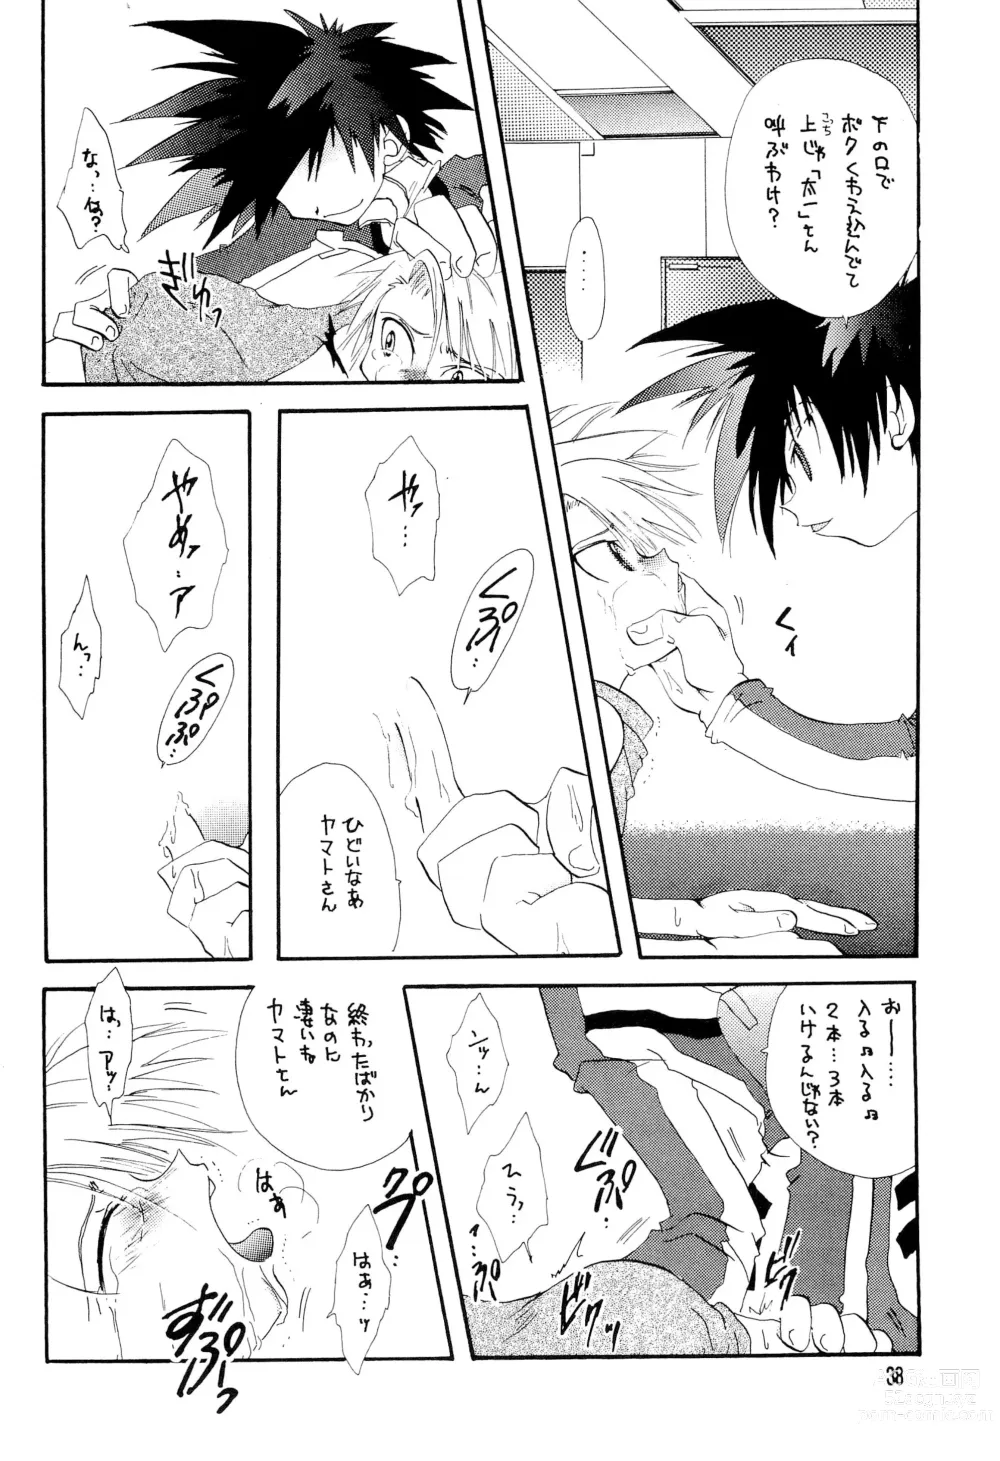 Page 38 of doujinshi BLACK BLACK